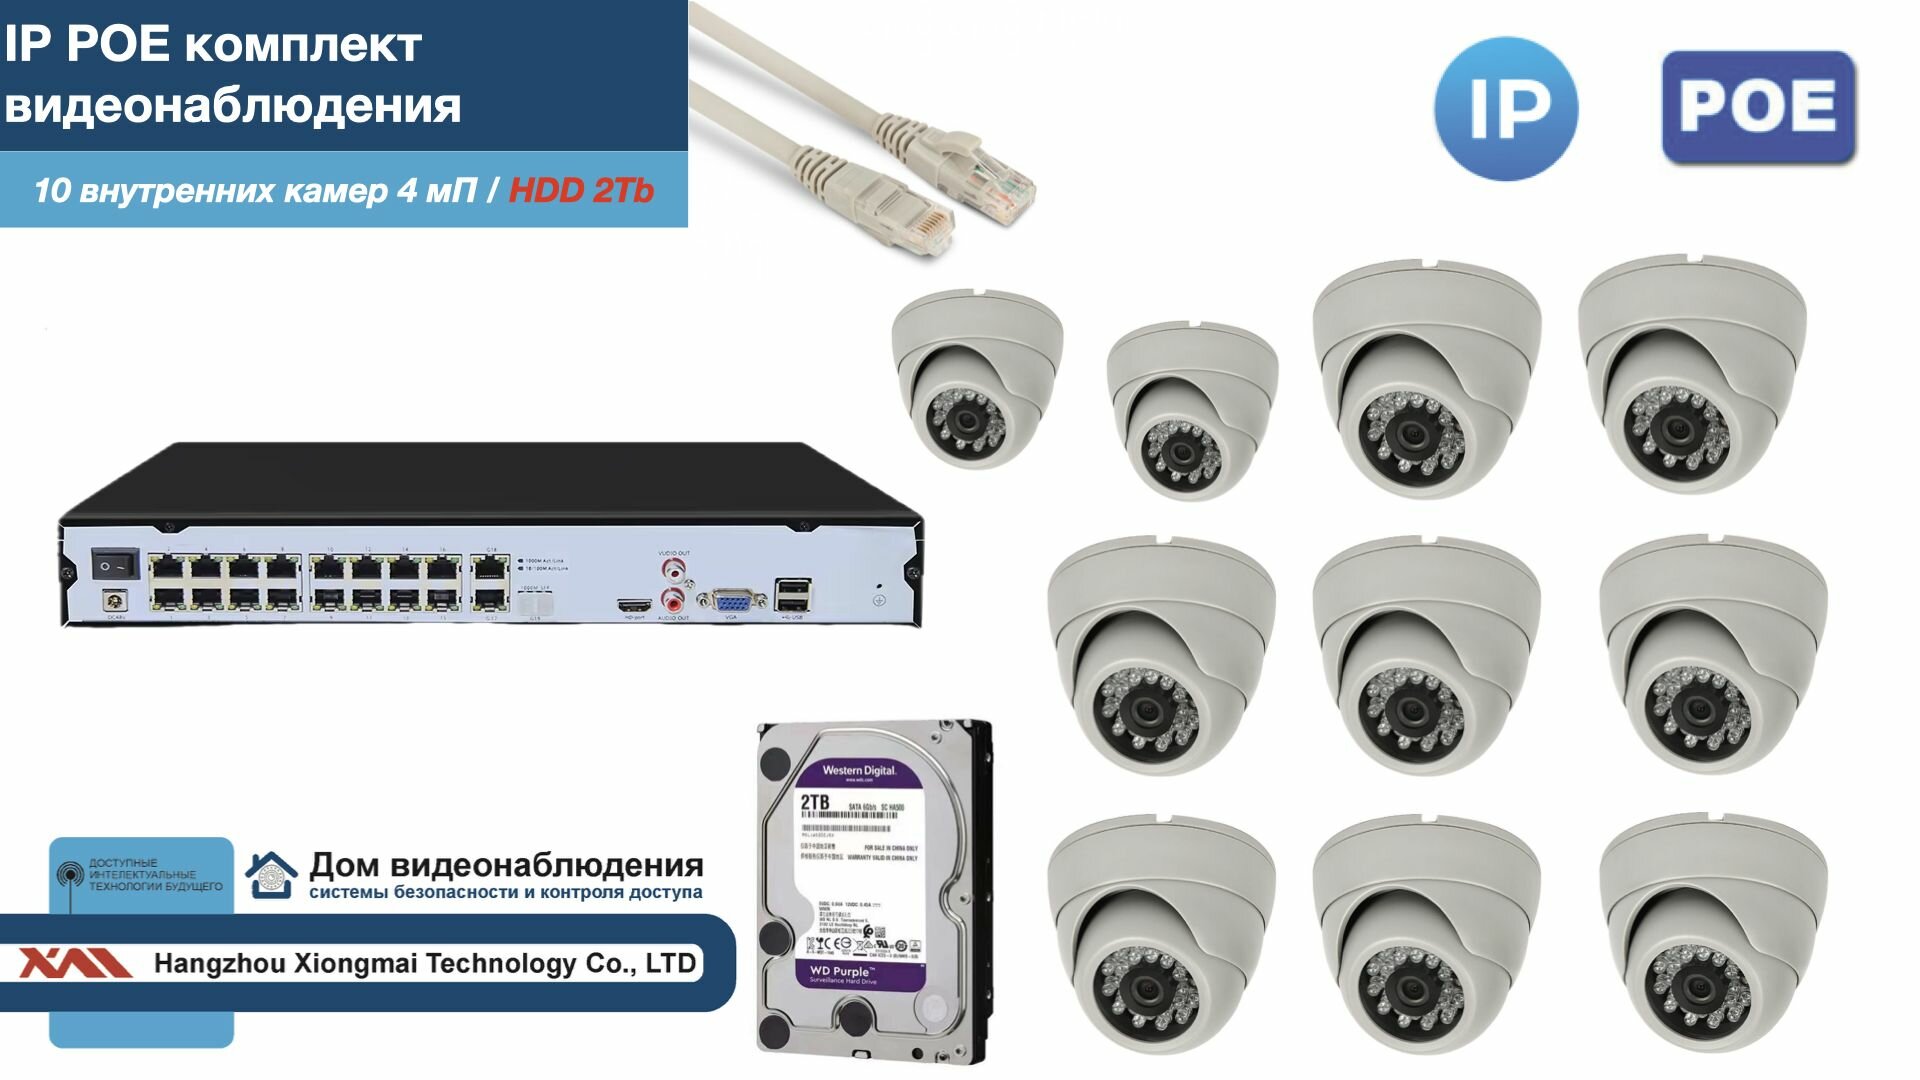 Полный IP POE комплект видеонаблюдения на 10 камер (KIT10IPPOE300W4MP-2-HDD2Tb)